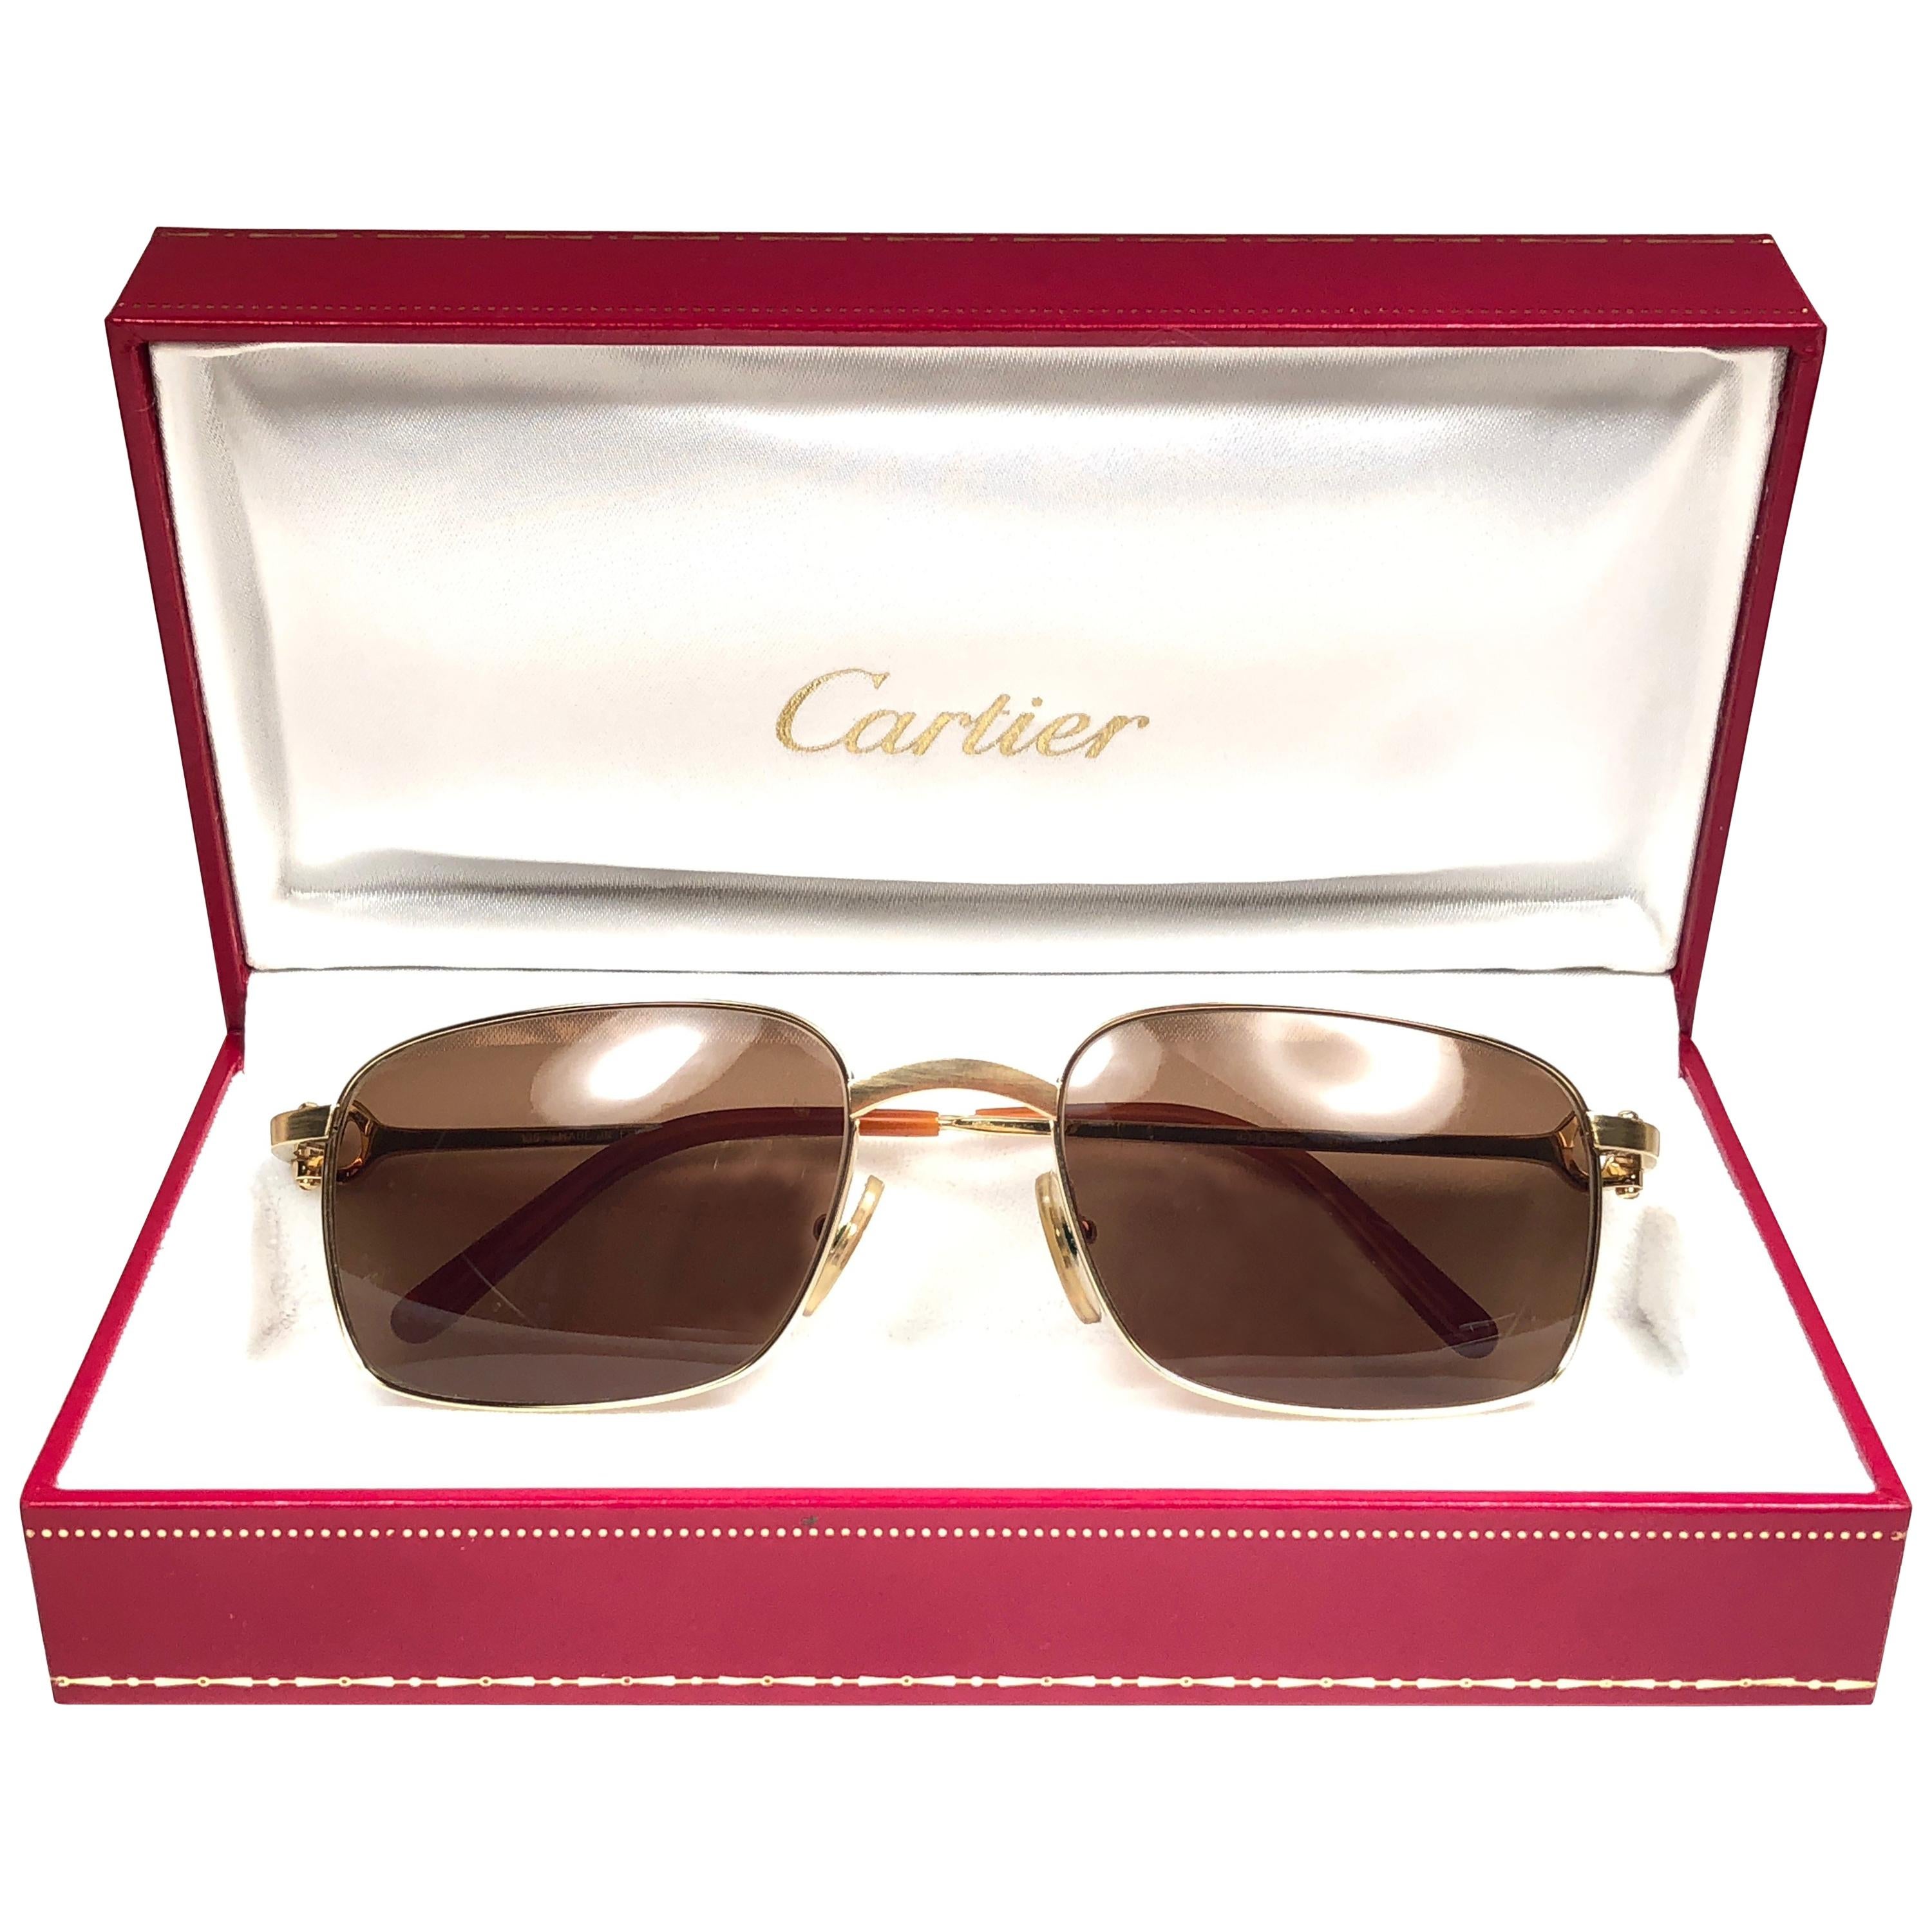 New Cartier Temper 54mm Brushed 18k Gold Sunglasses France